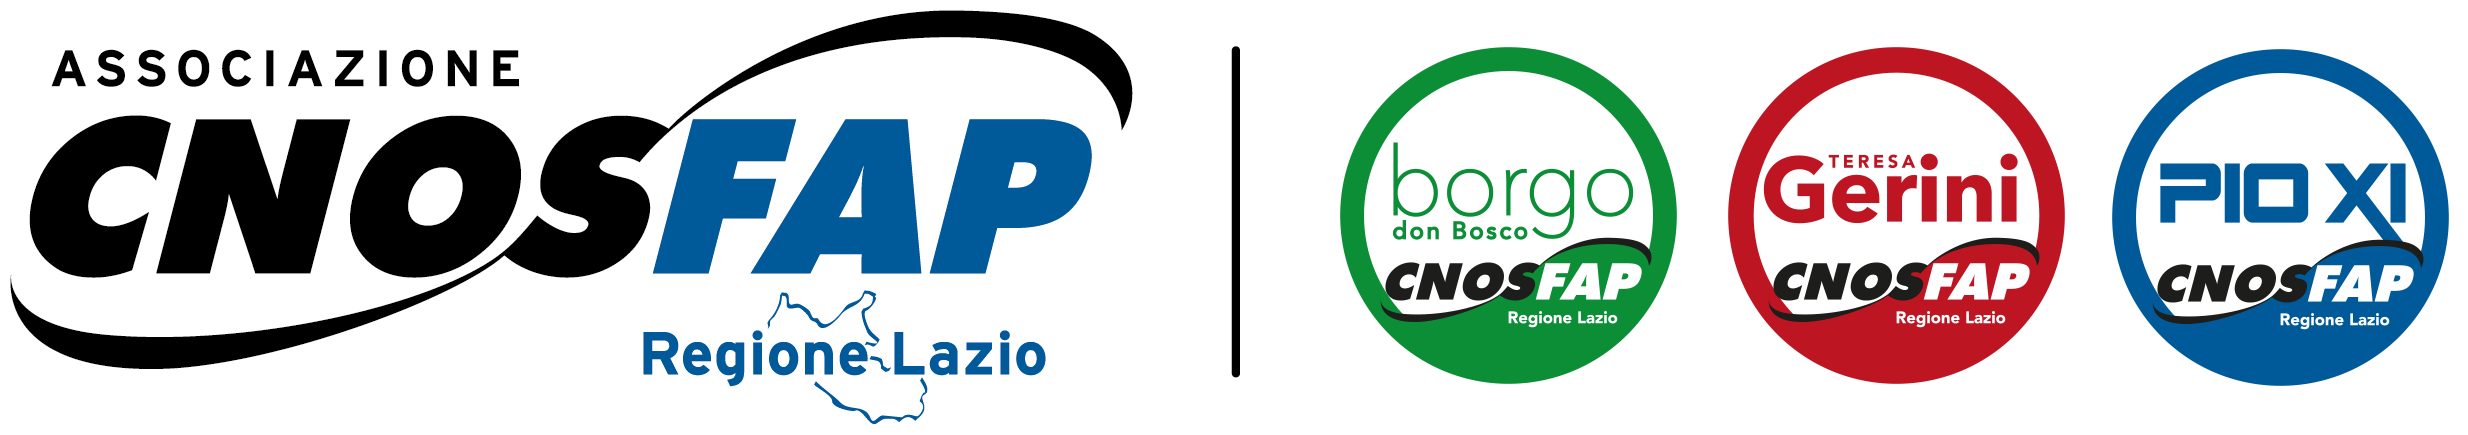 logo CNOS-FAP regione lazio